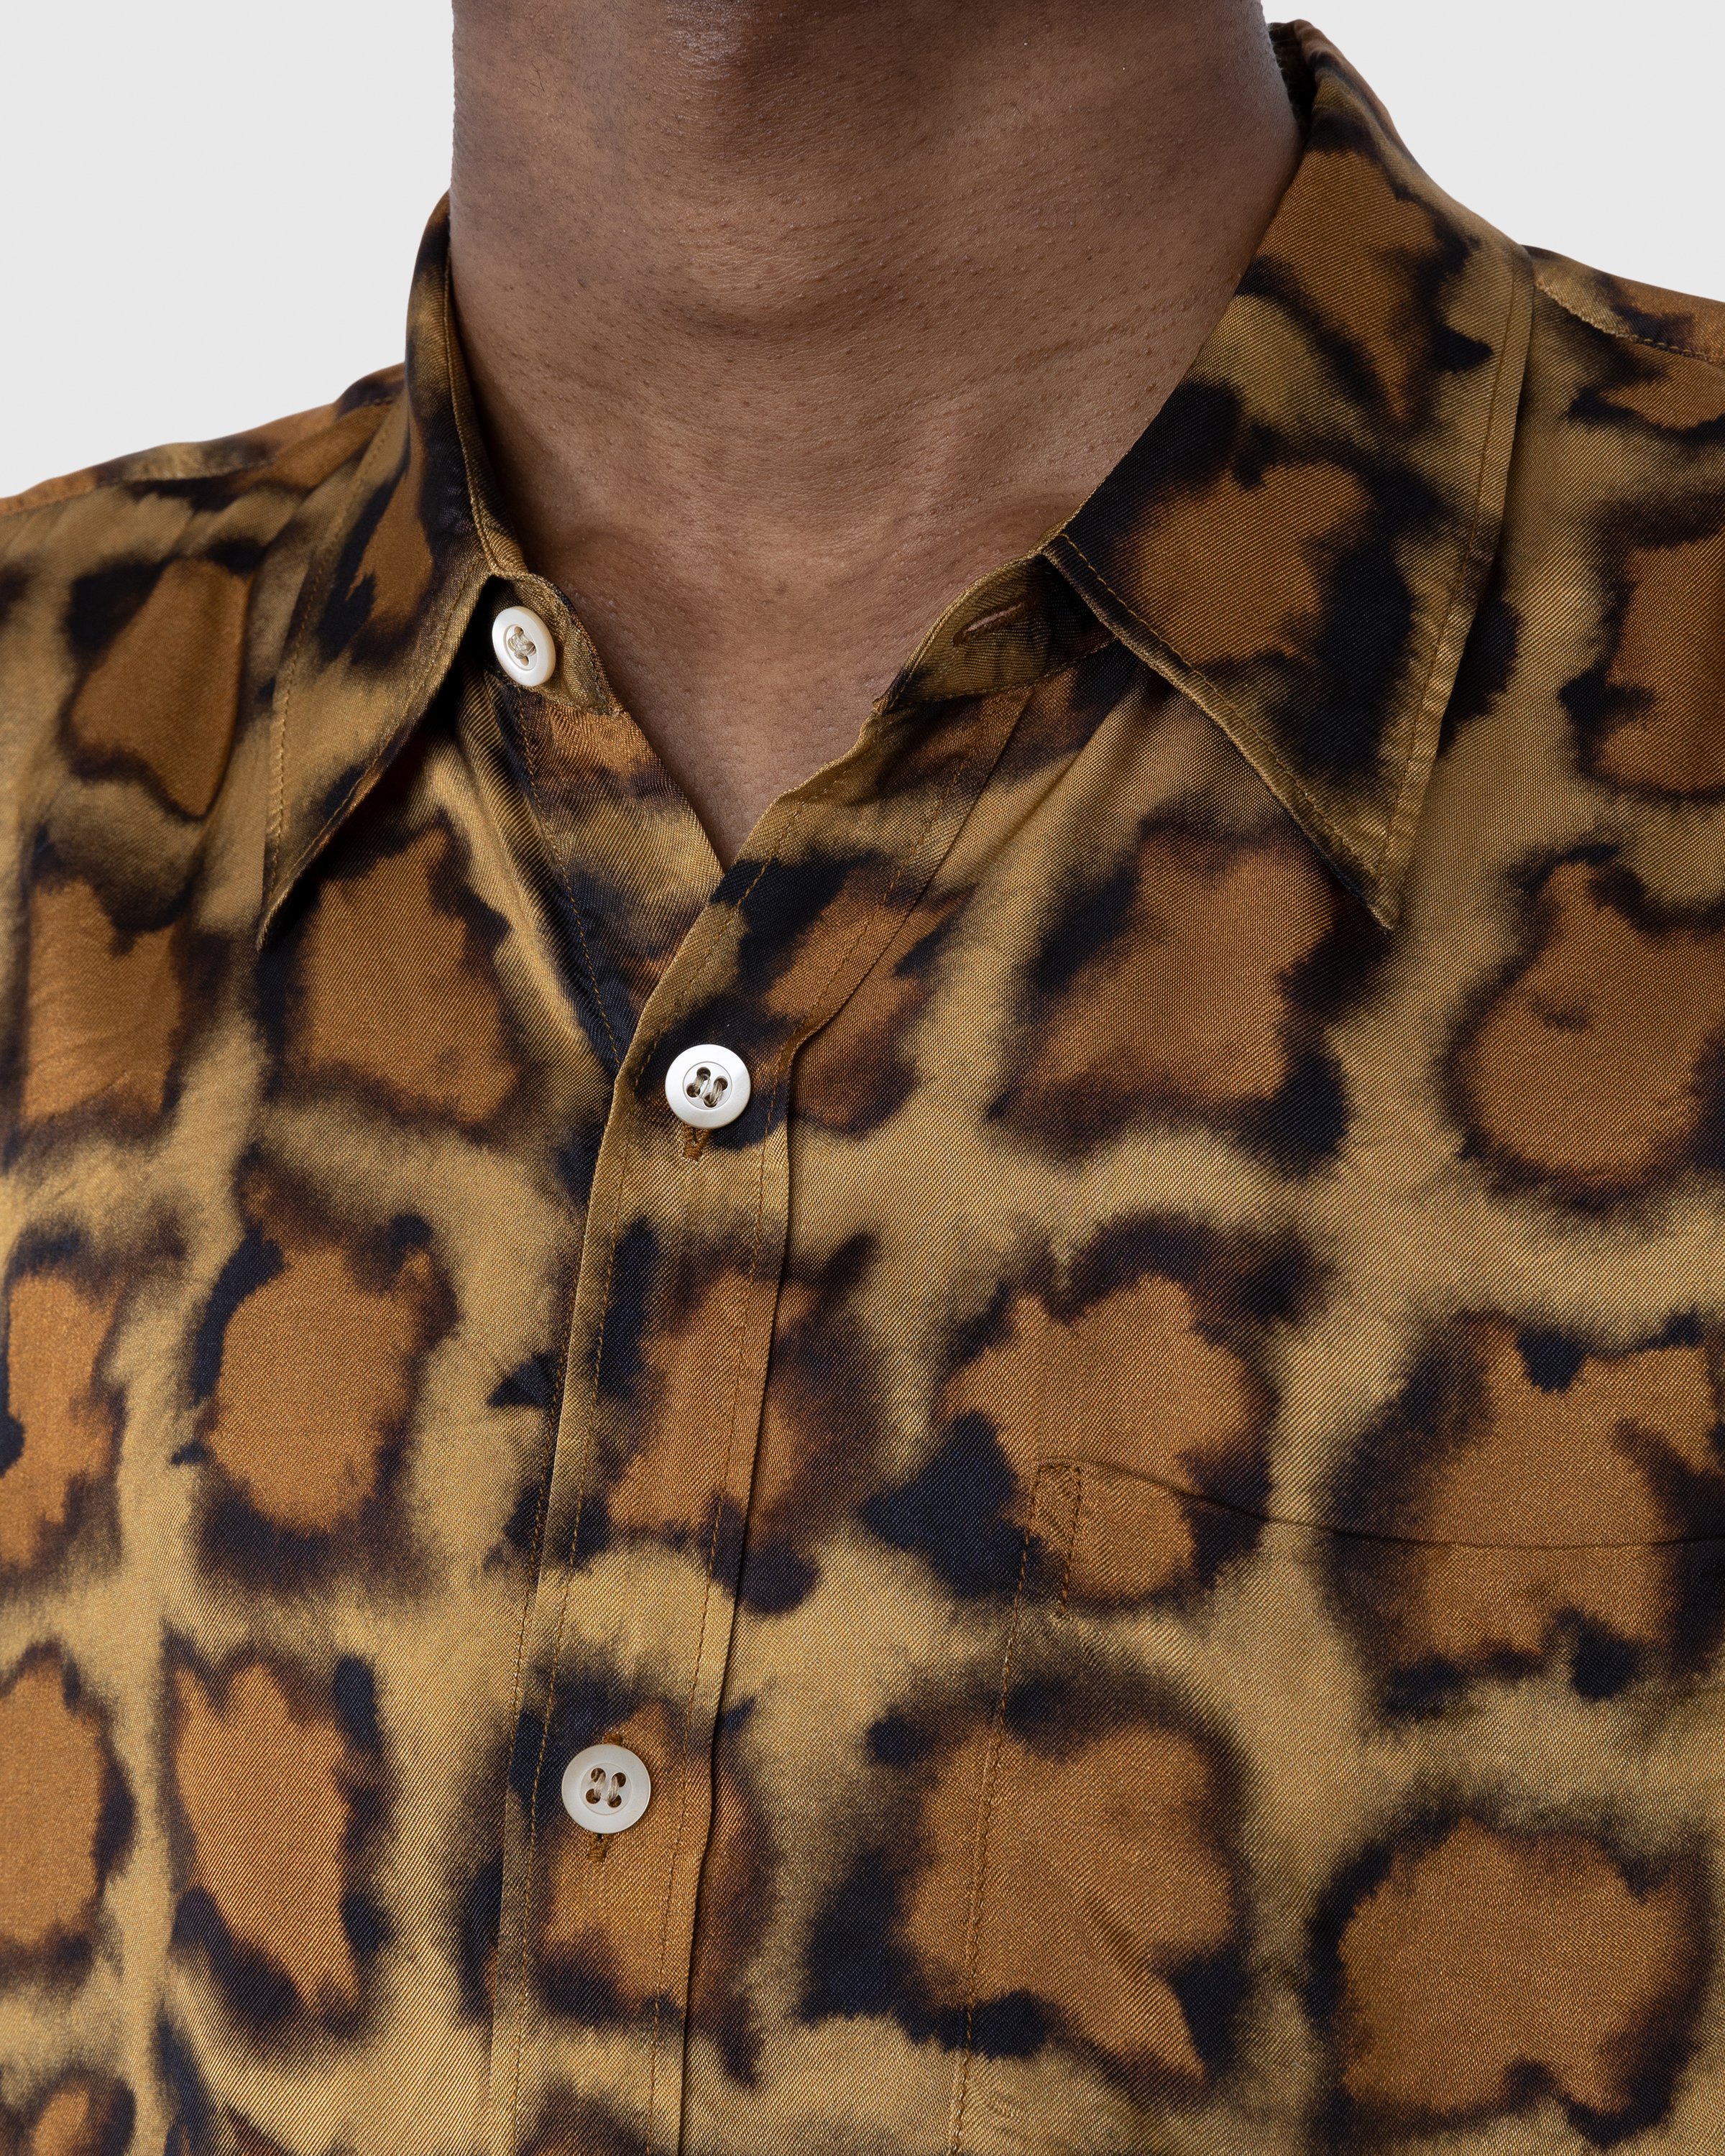 Dries van Noten - Corbino Shirt Camel - Clothing - Yellow - Image 5